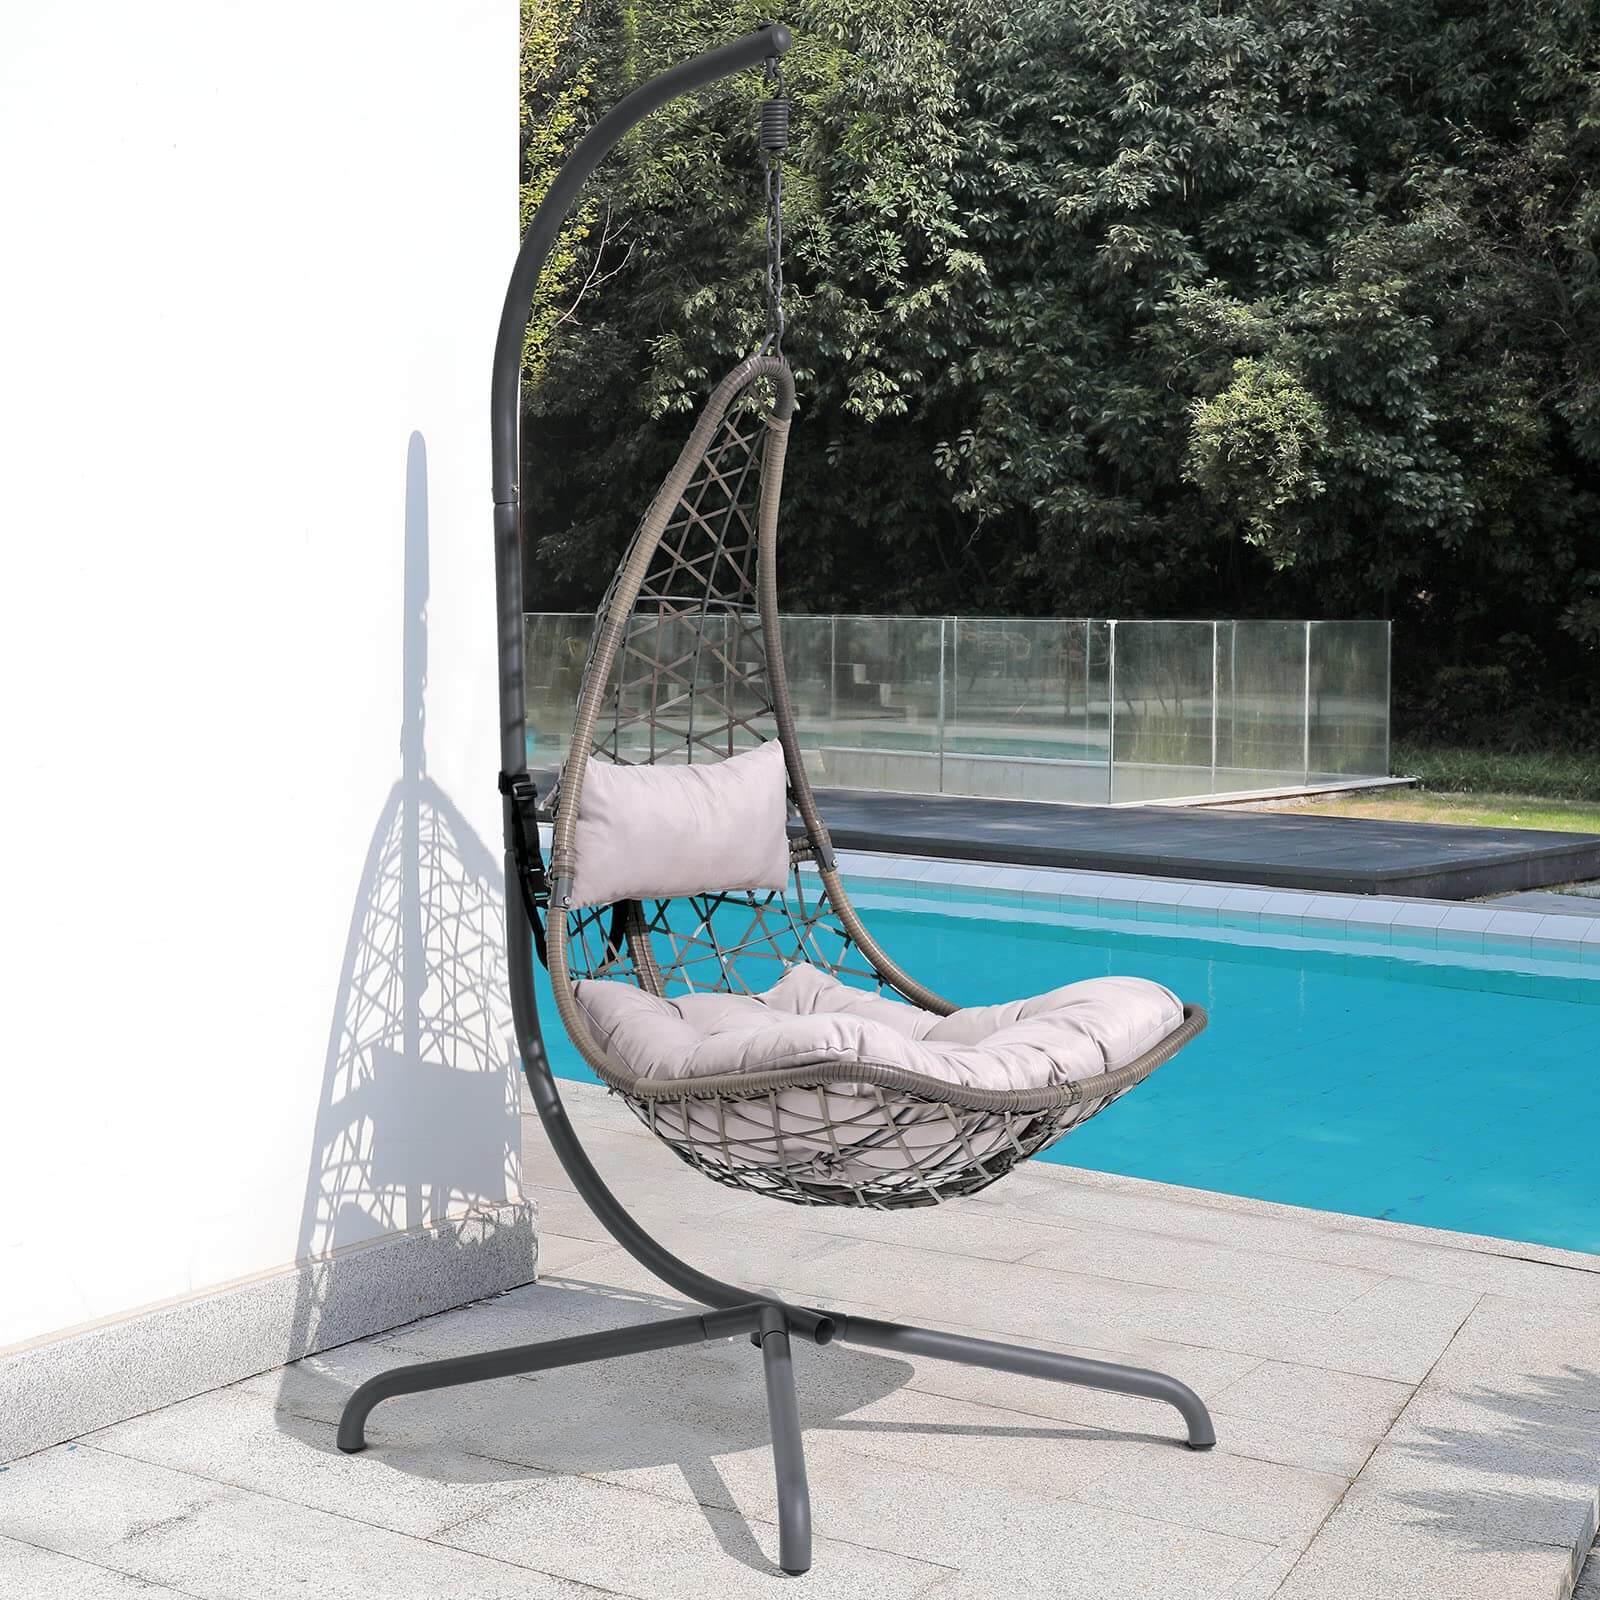 Outdoor Narrow Egg Chair Wicker, Patio Rattan Basket Chair